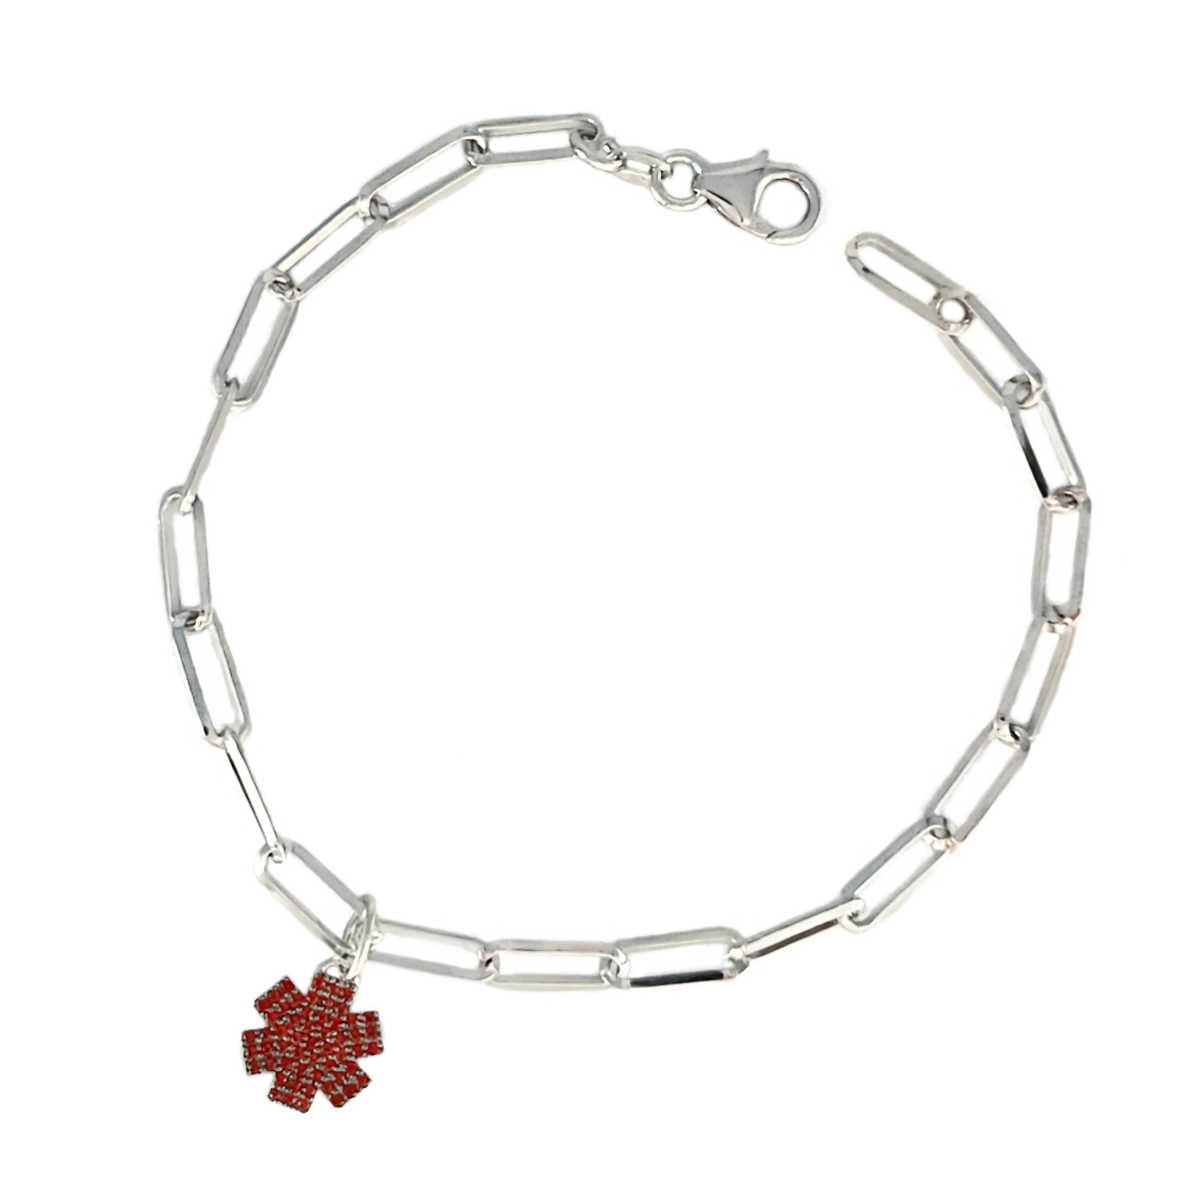 Sterling Silver & Garnet Star of Life Medical Charm | Medical ID Bracelets & Necklaces | Nurse, EMT, Doctor Gifts | CHARMED Medical Jewelry